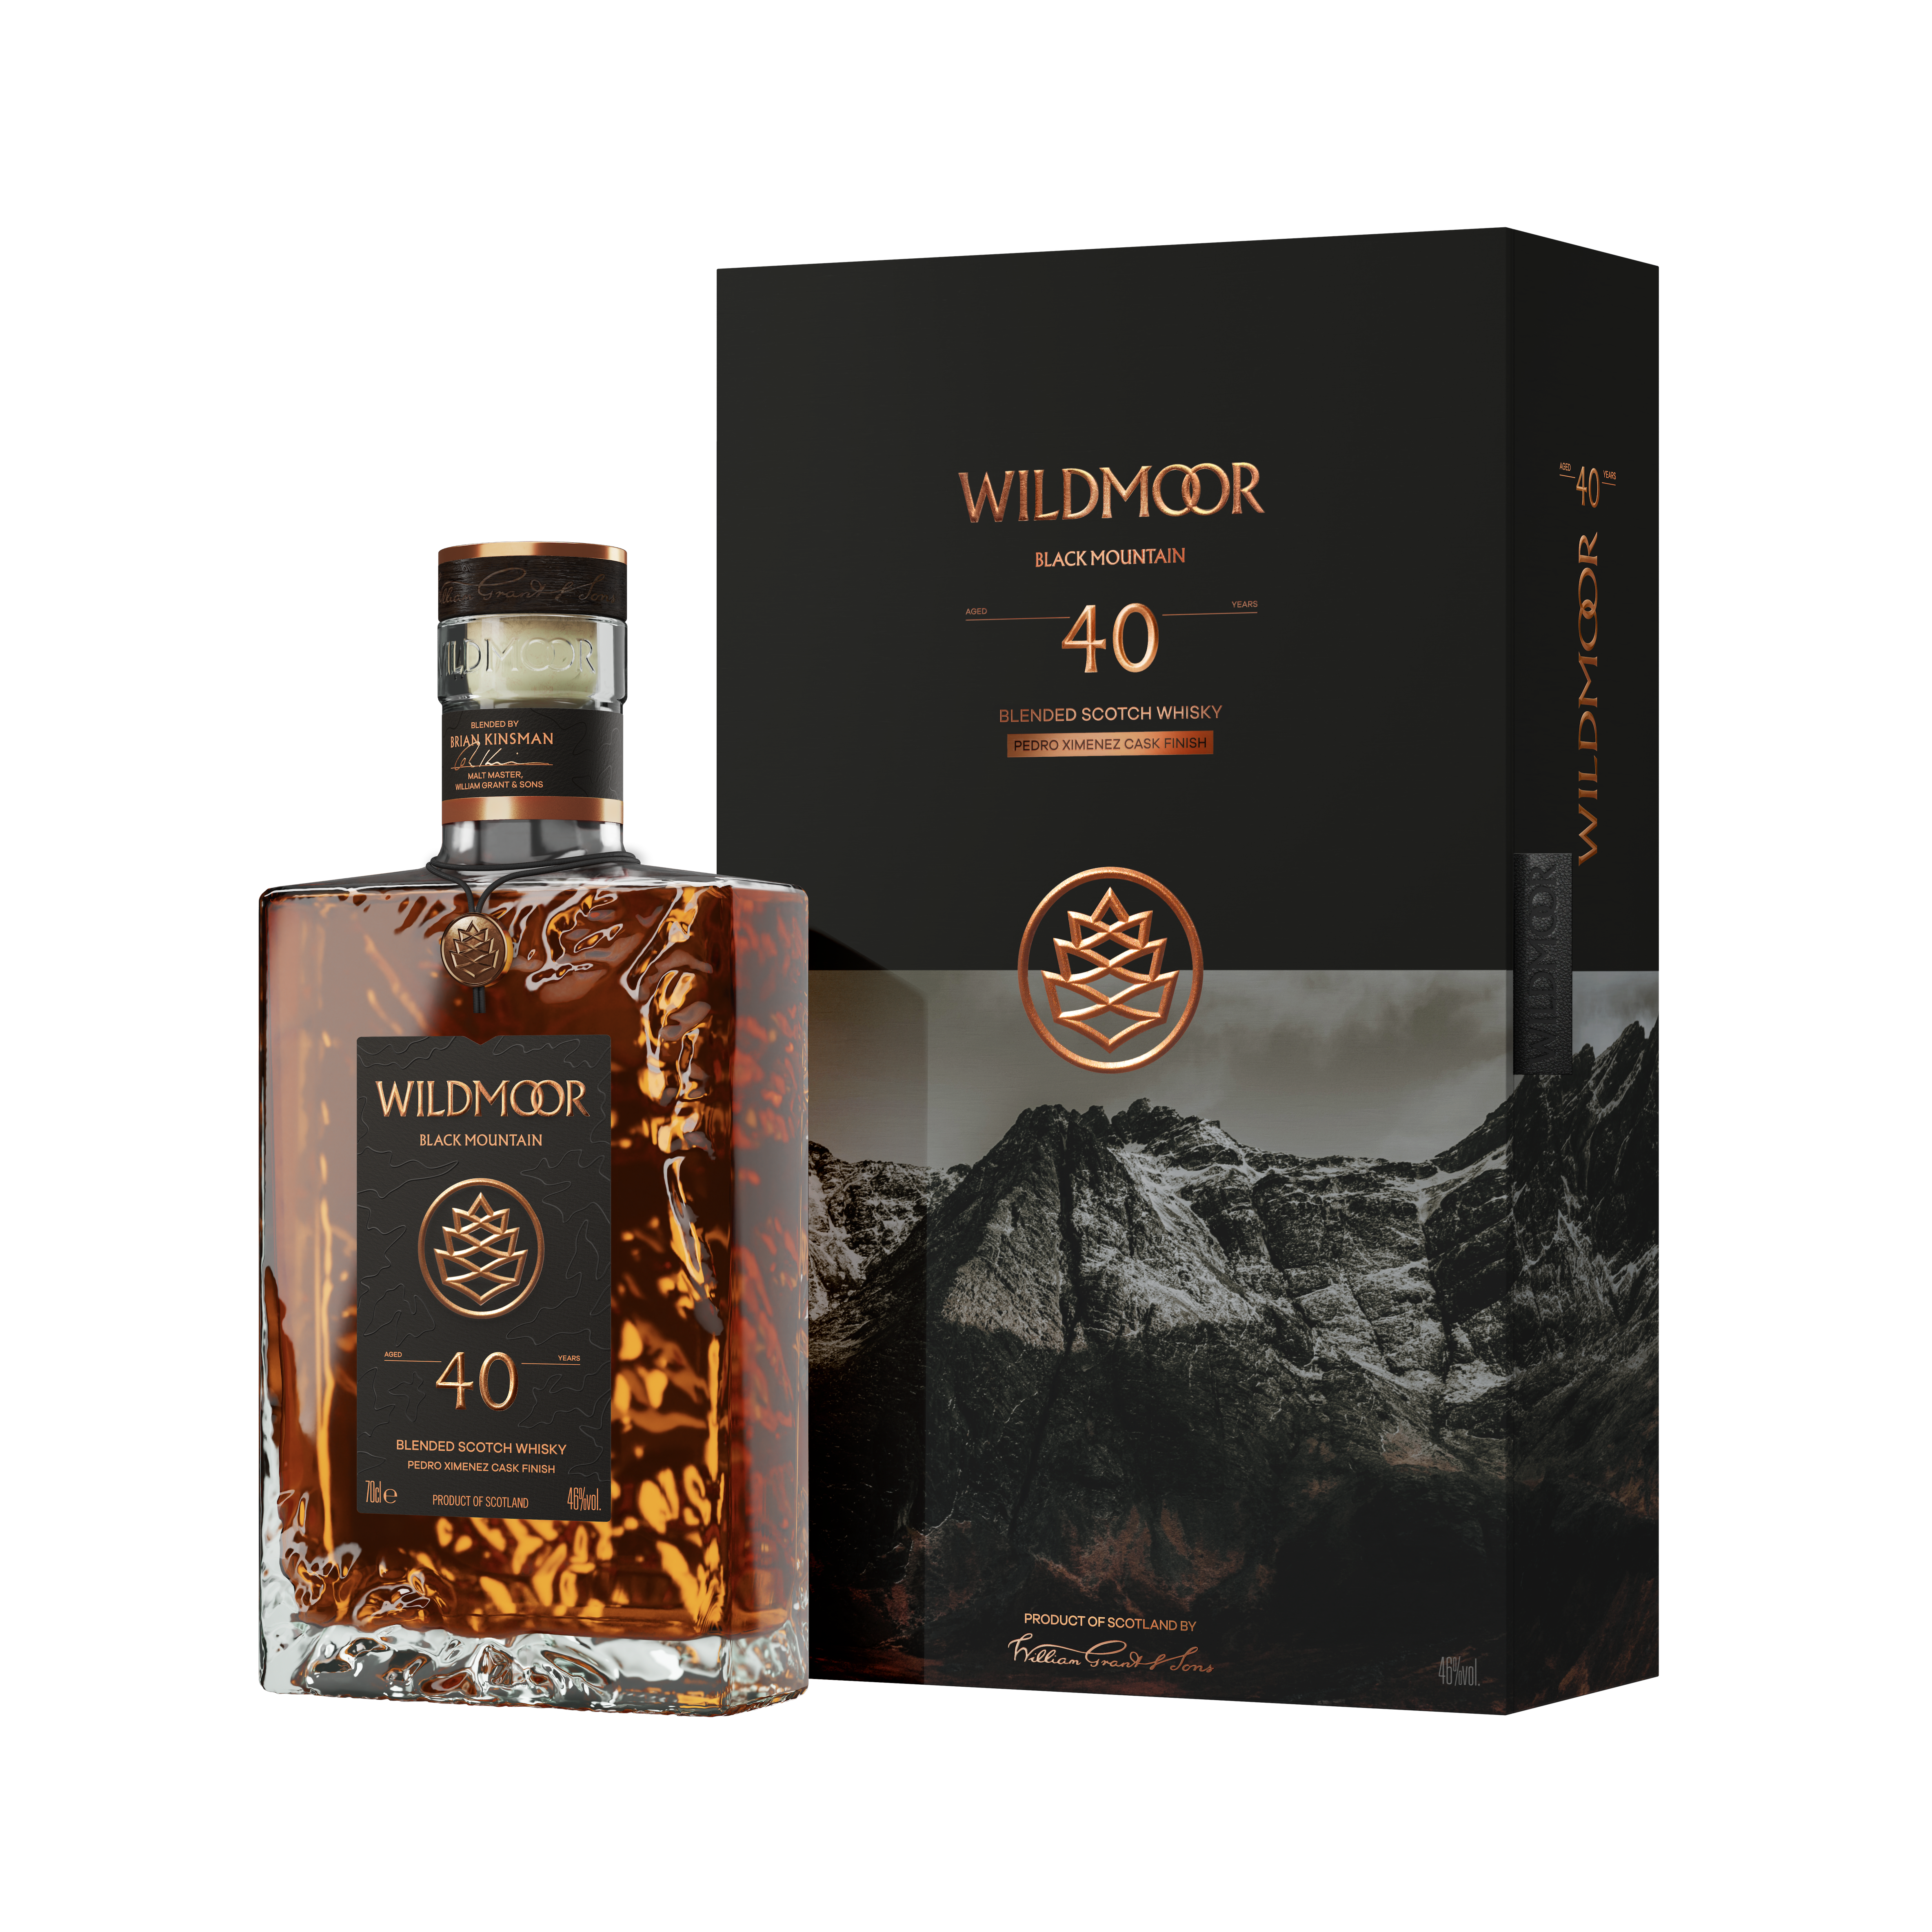 Wildmoor luxury blended Scotch Whisky - WILDMOOR Black Mountain